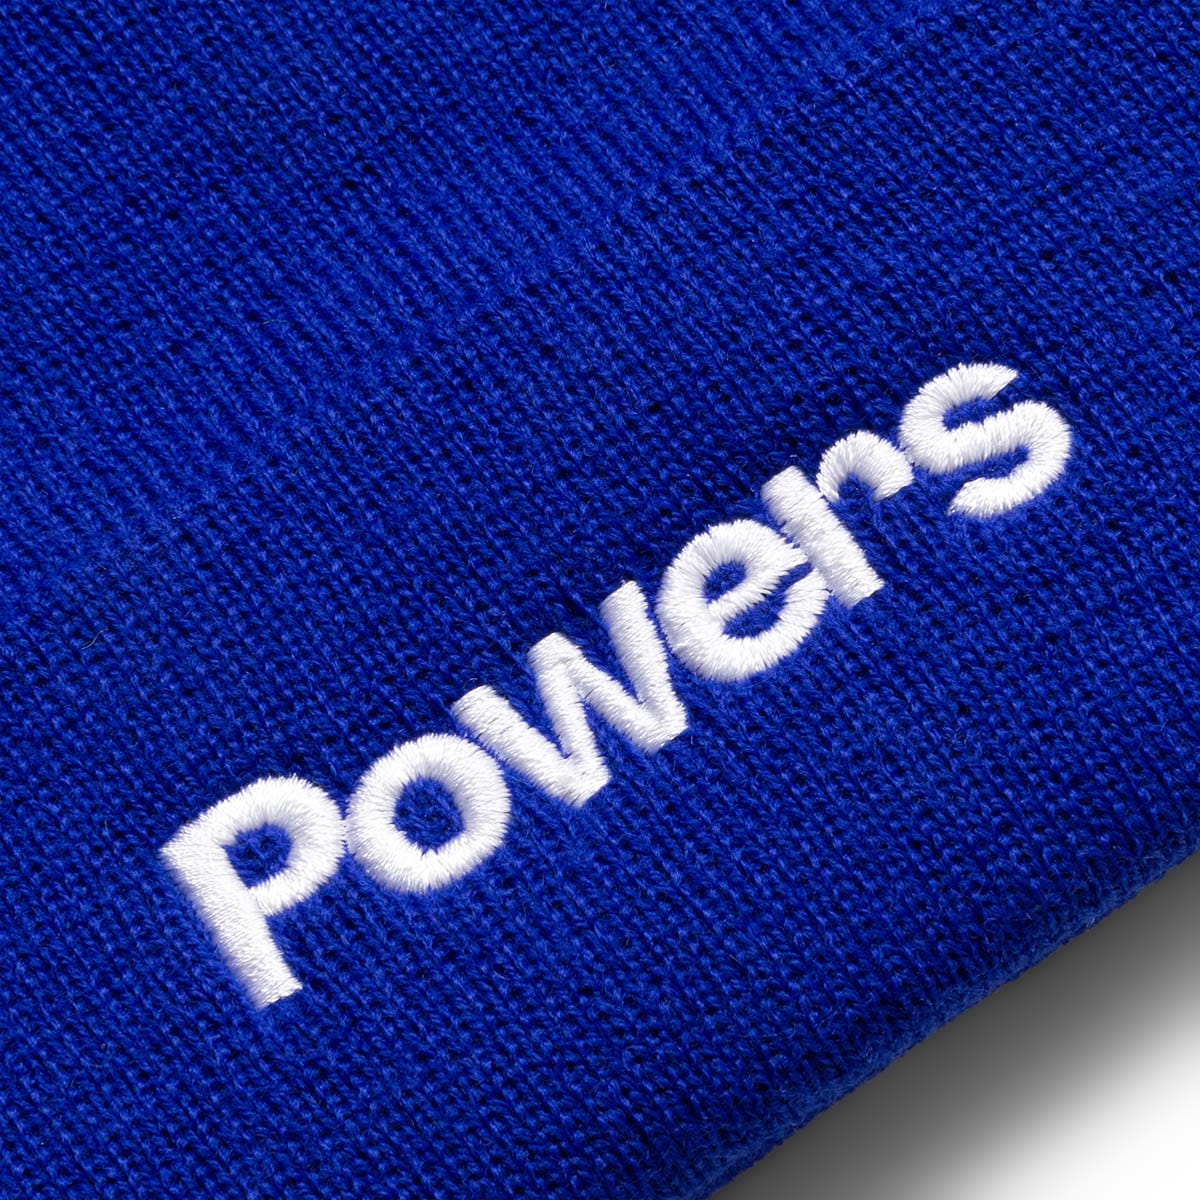 Powers Headwear BLUE / O/S SIMPLE LOGO BEANIE